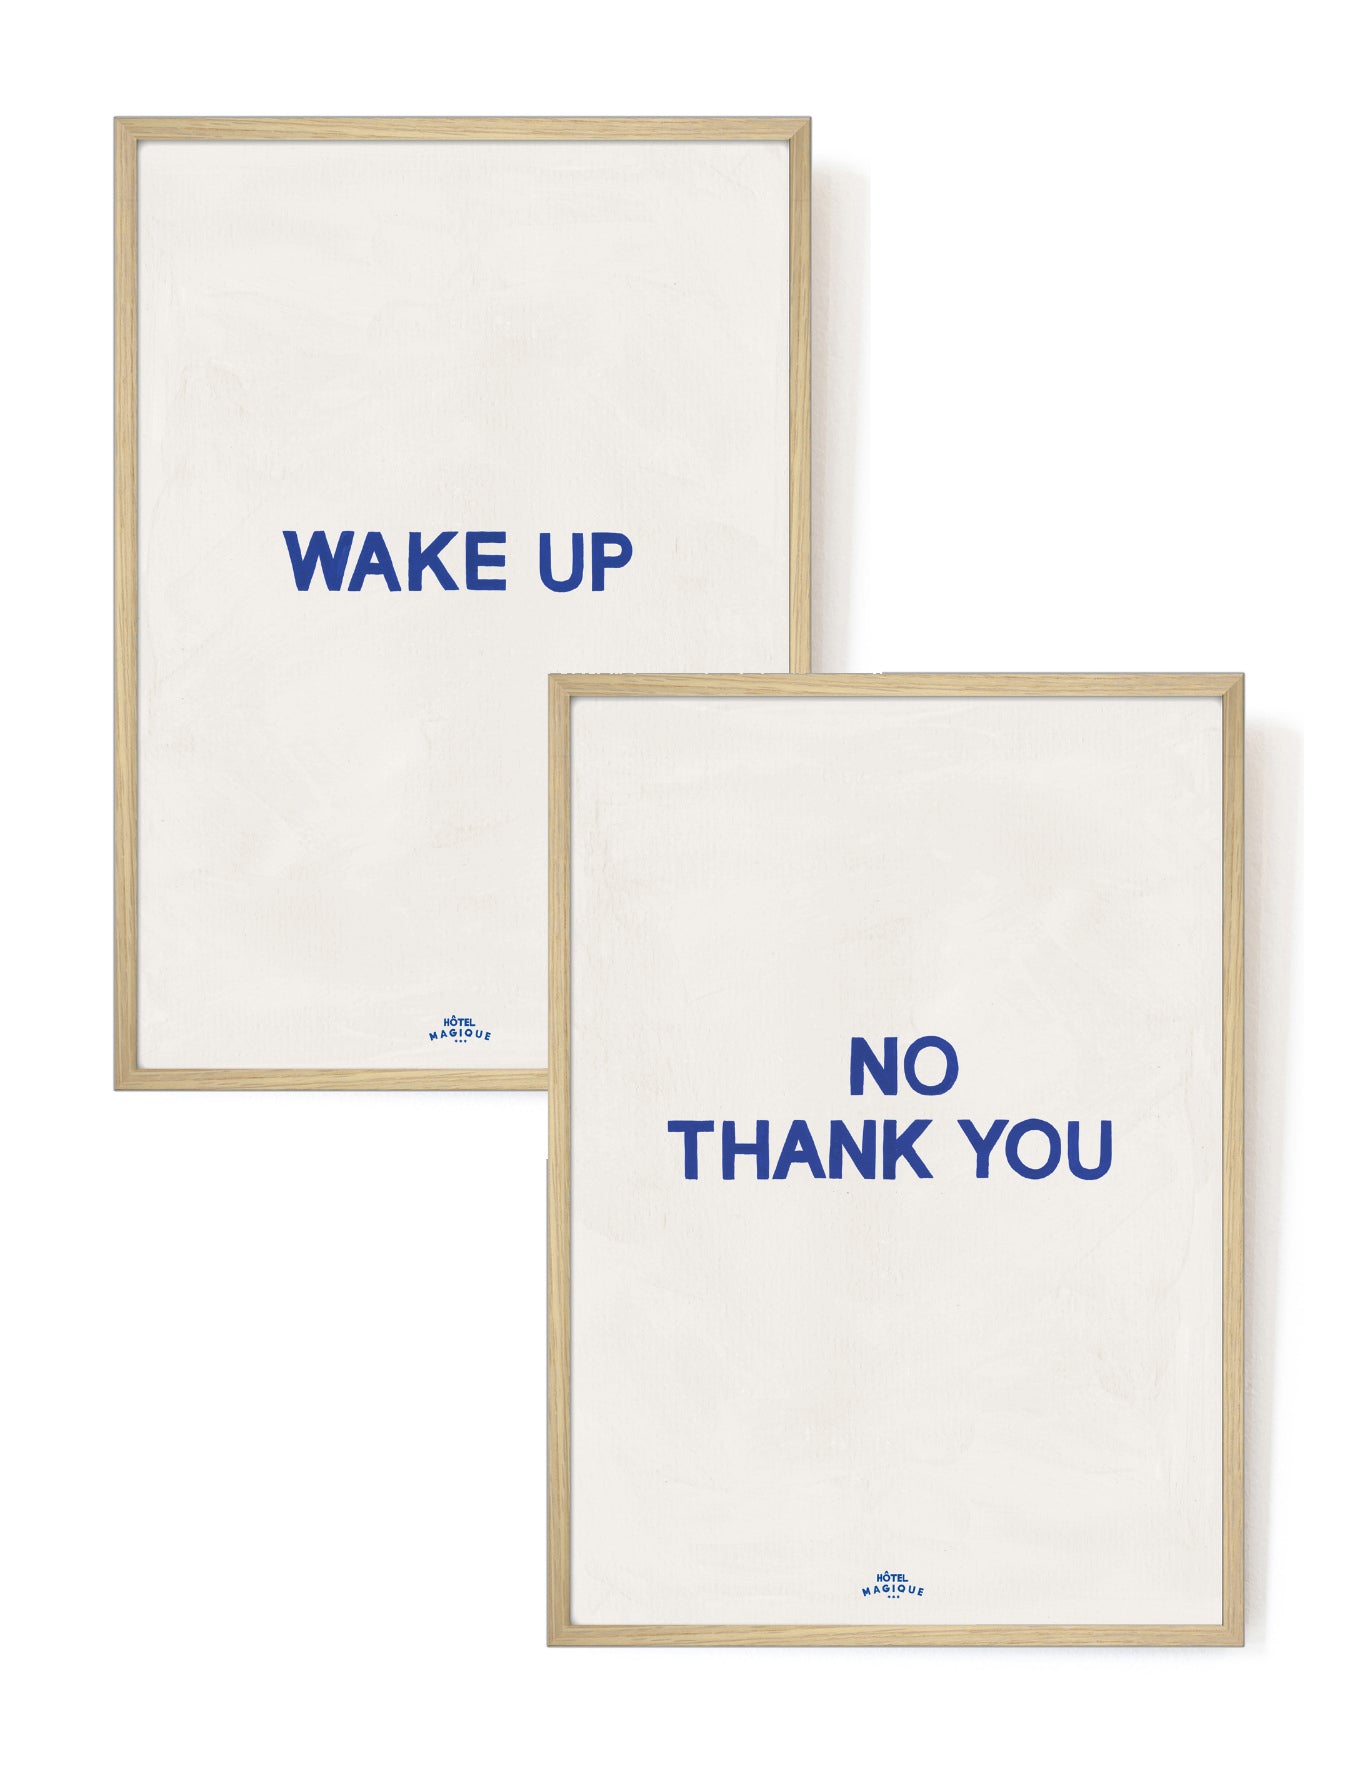 Wake up - No, thank you. The blue set